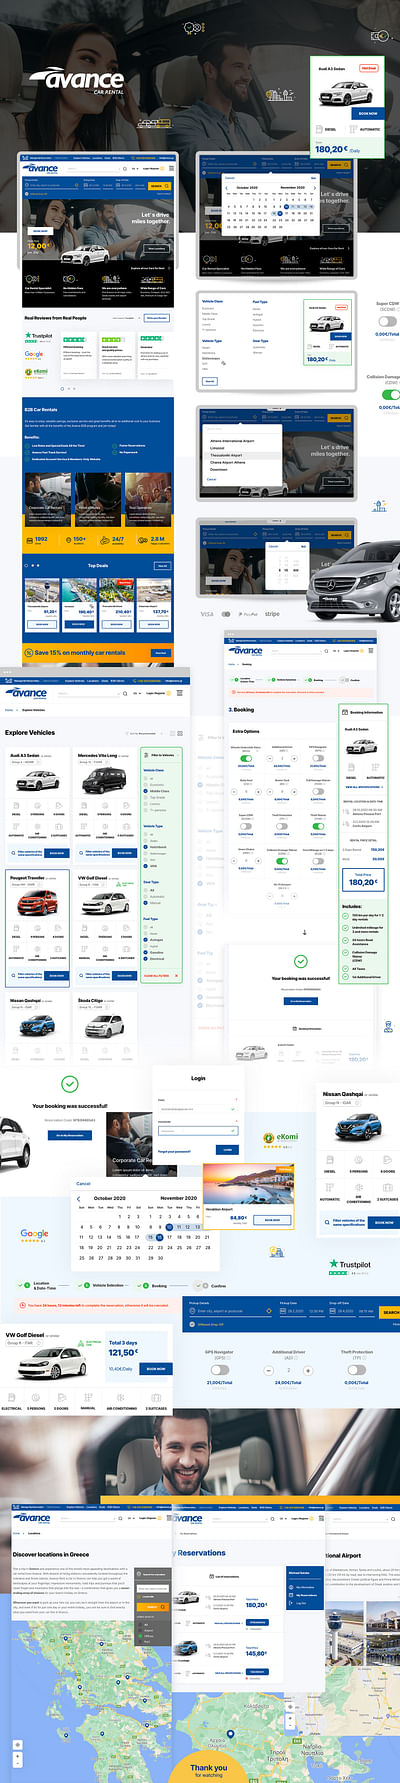 Avance Car Rental - Web Application